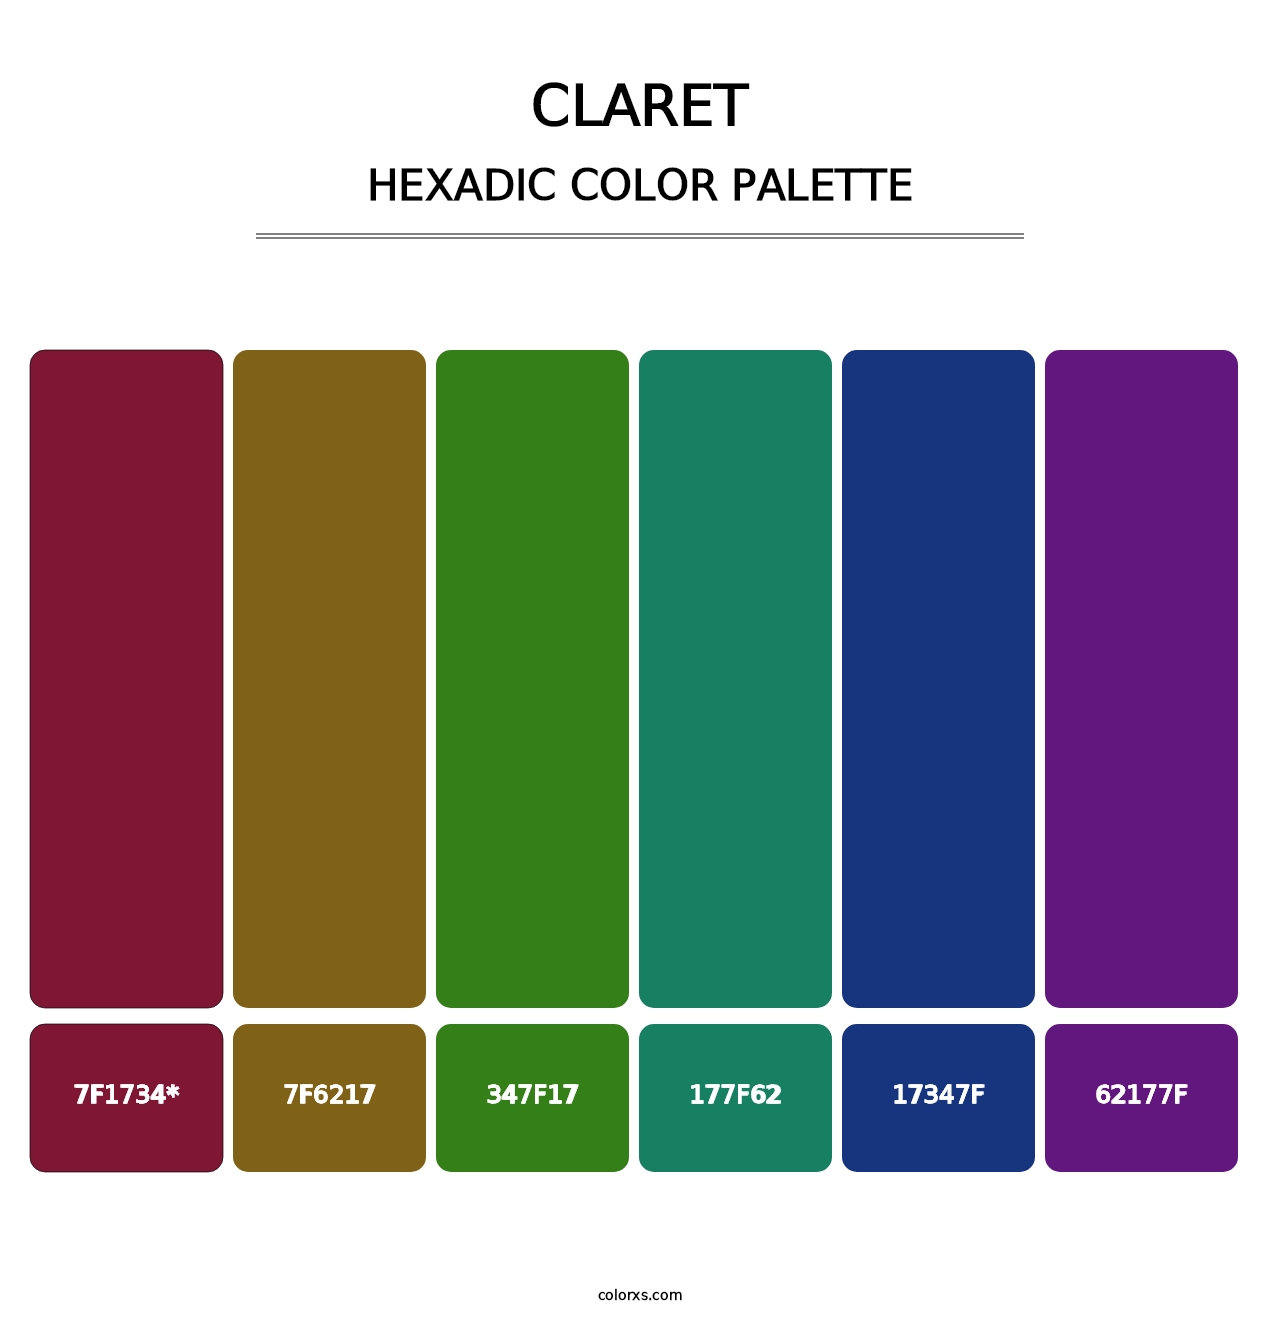 Claret - Hexadic Color Palette